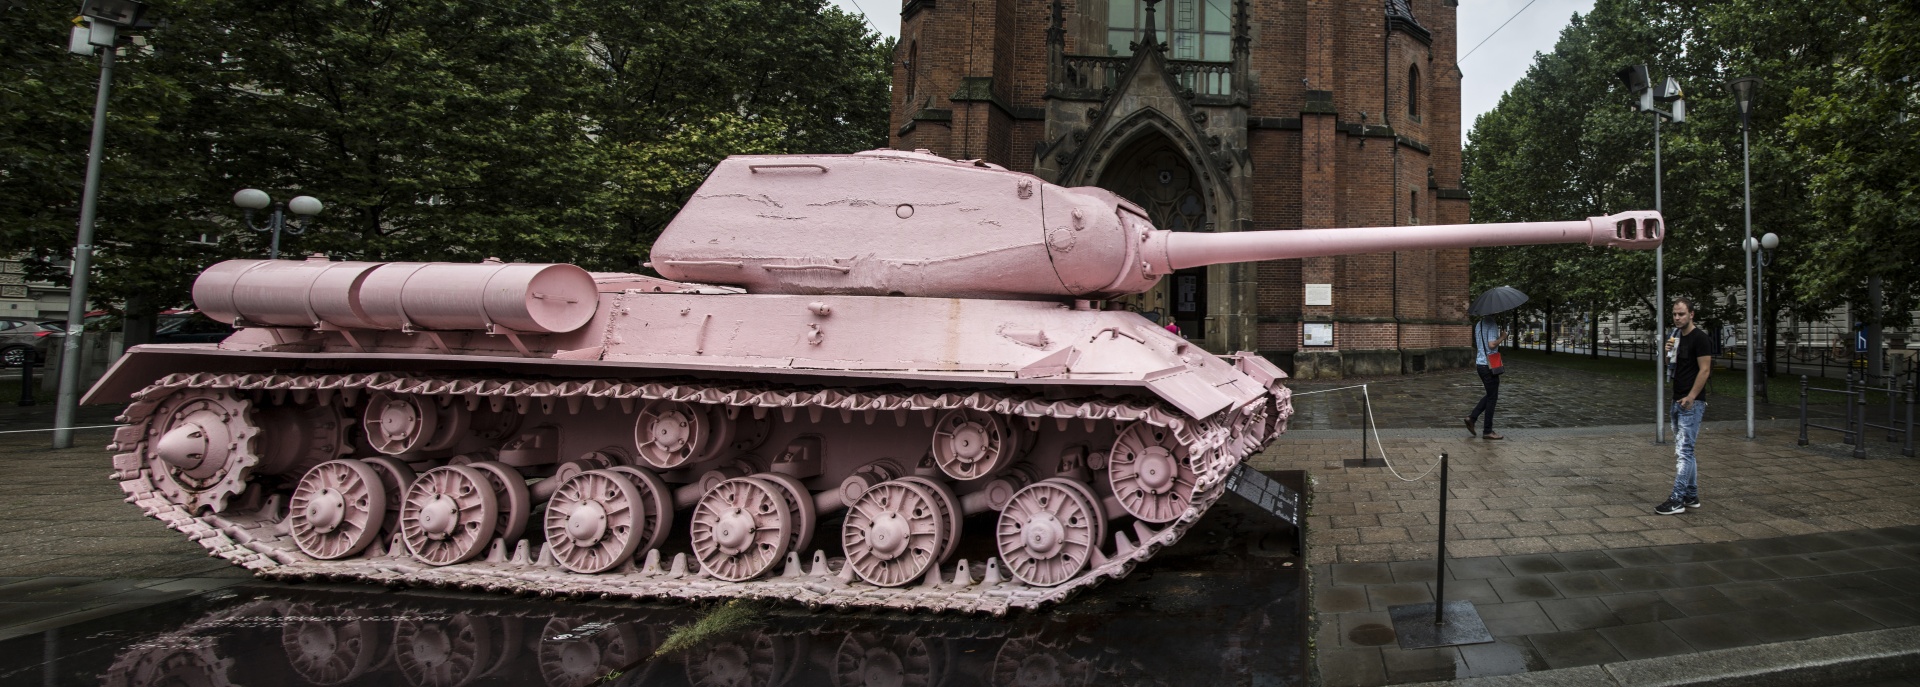 Pink Tank In Brno